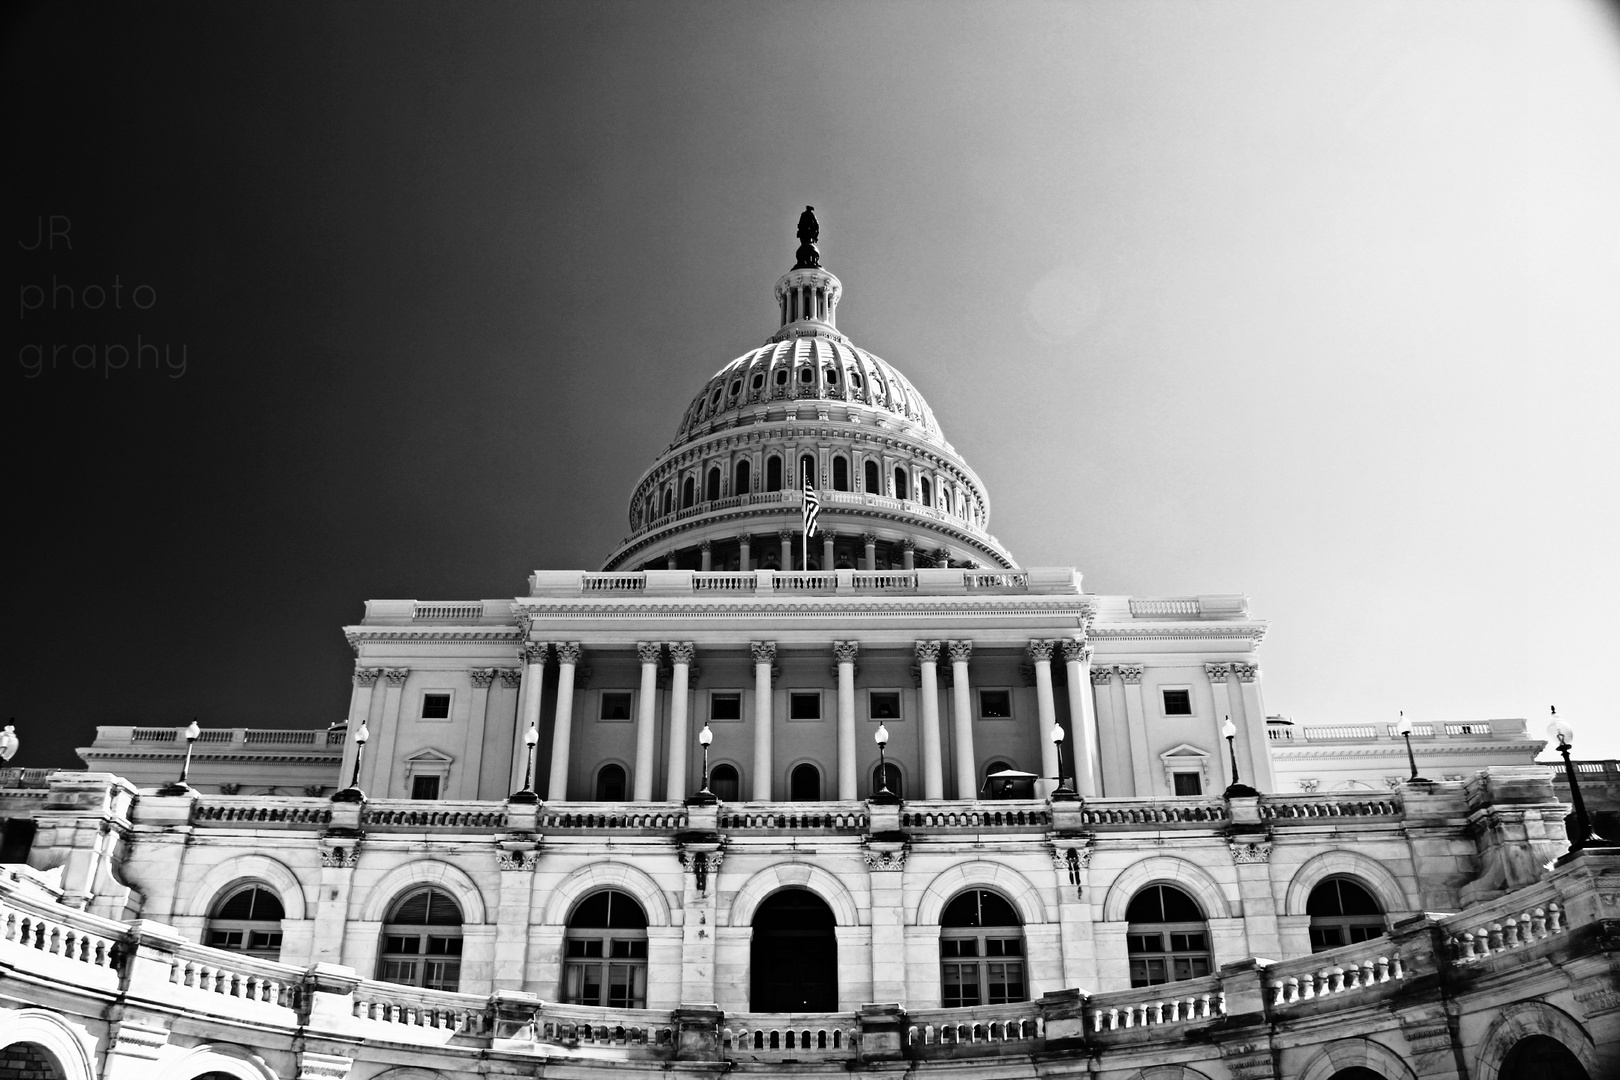 U.S. Capitol - Washington, D.C.